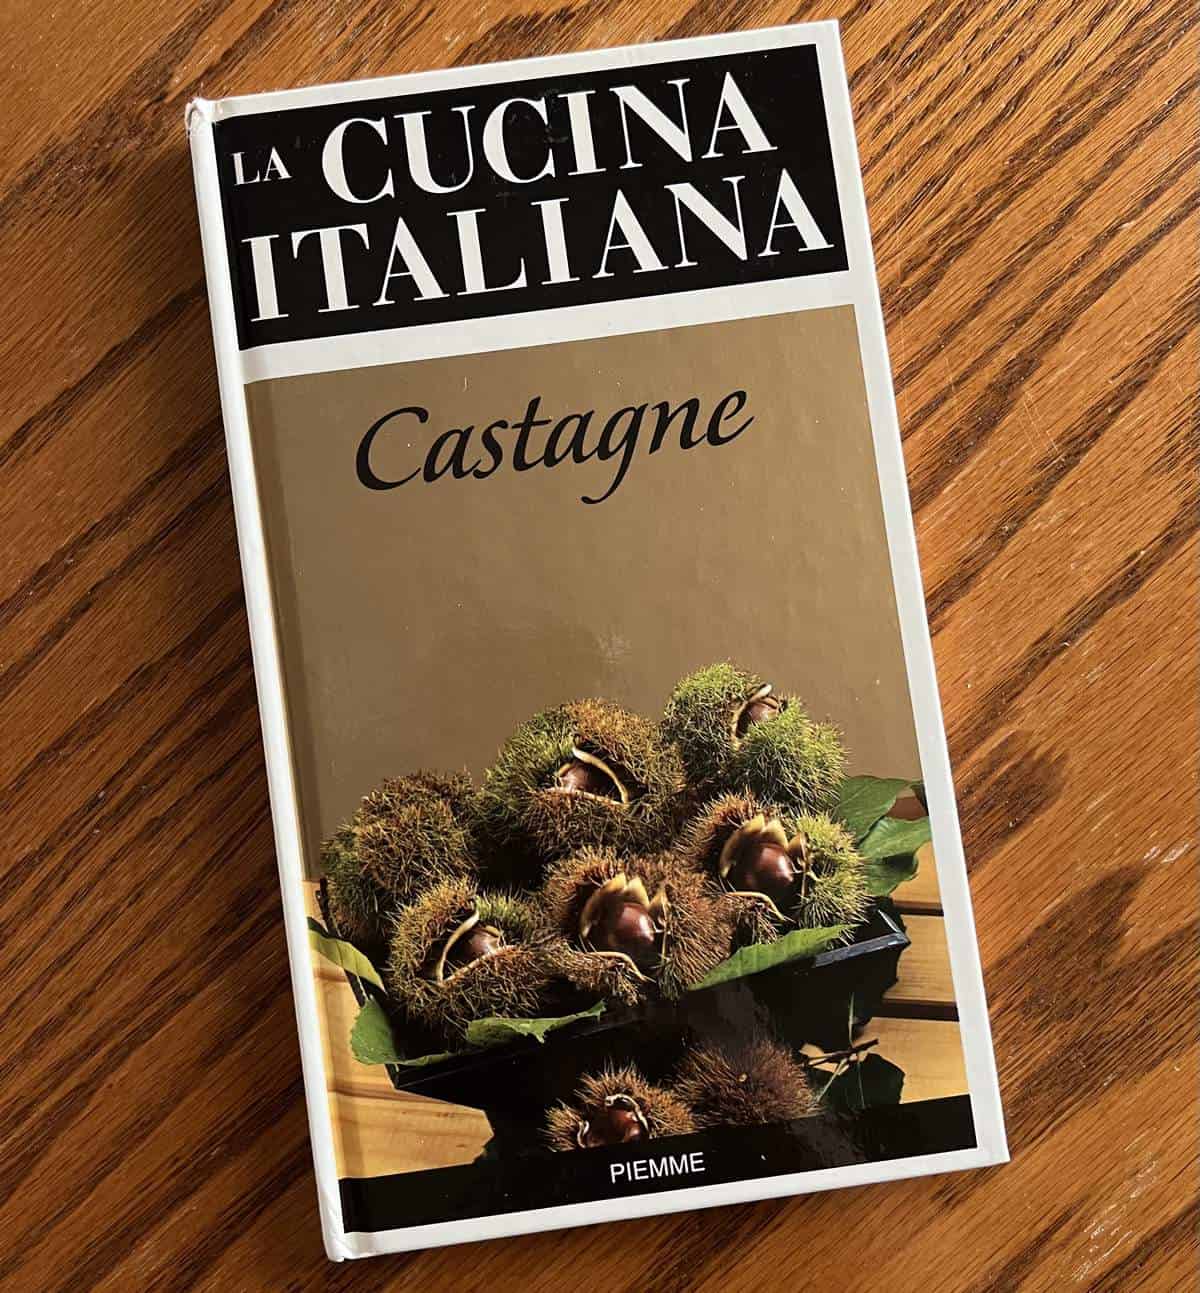 An Italian cookbook on chestnuts.